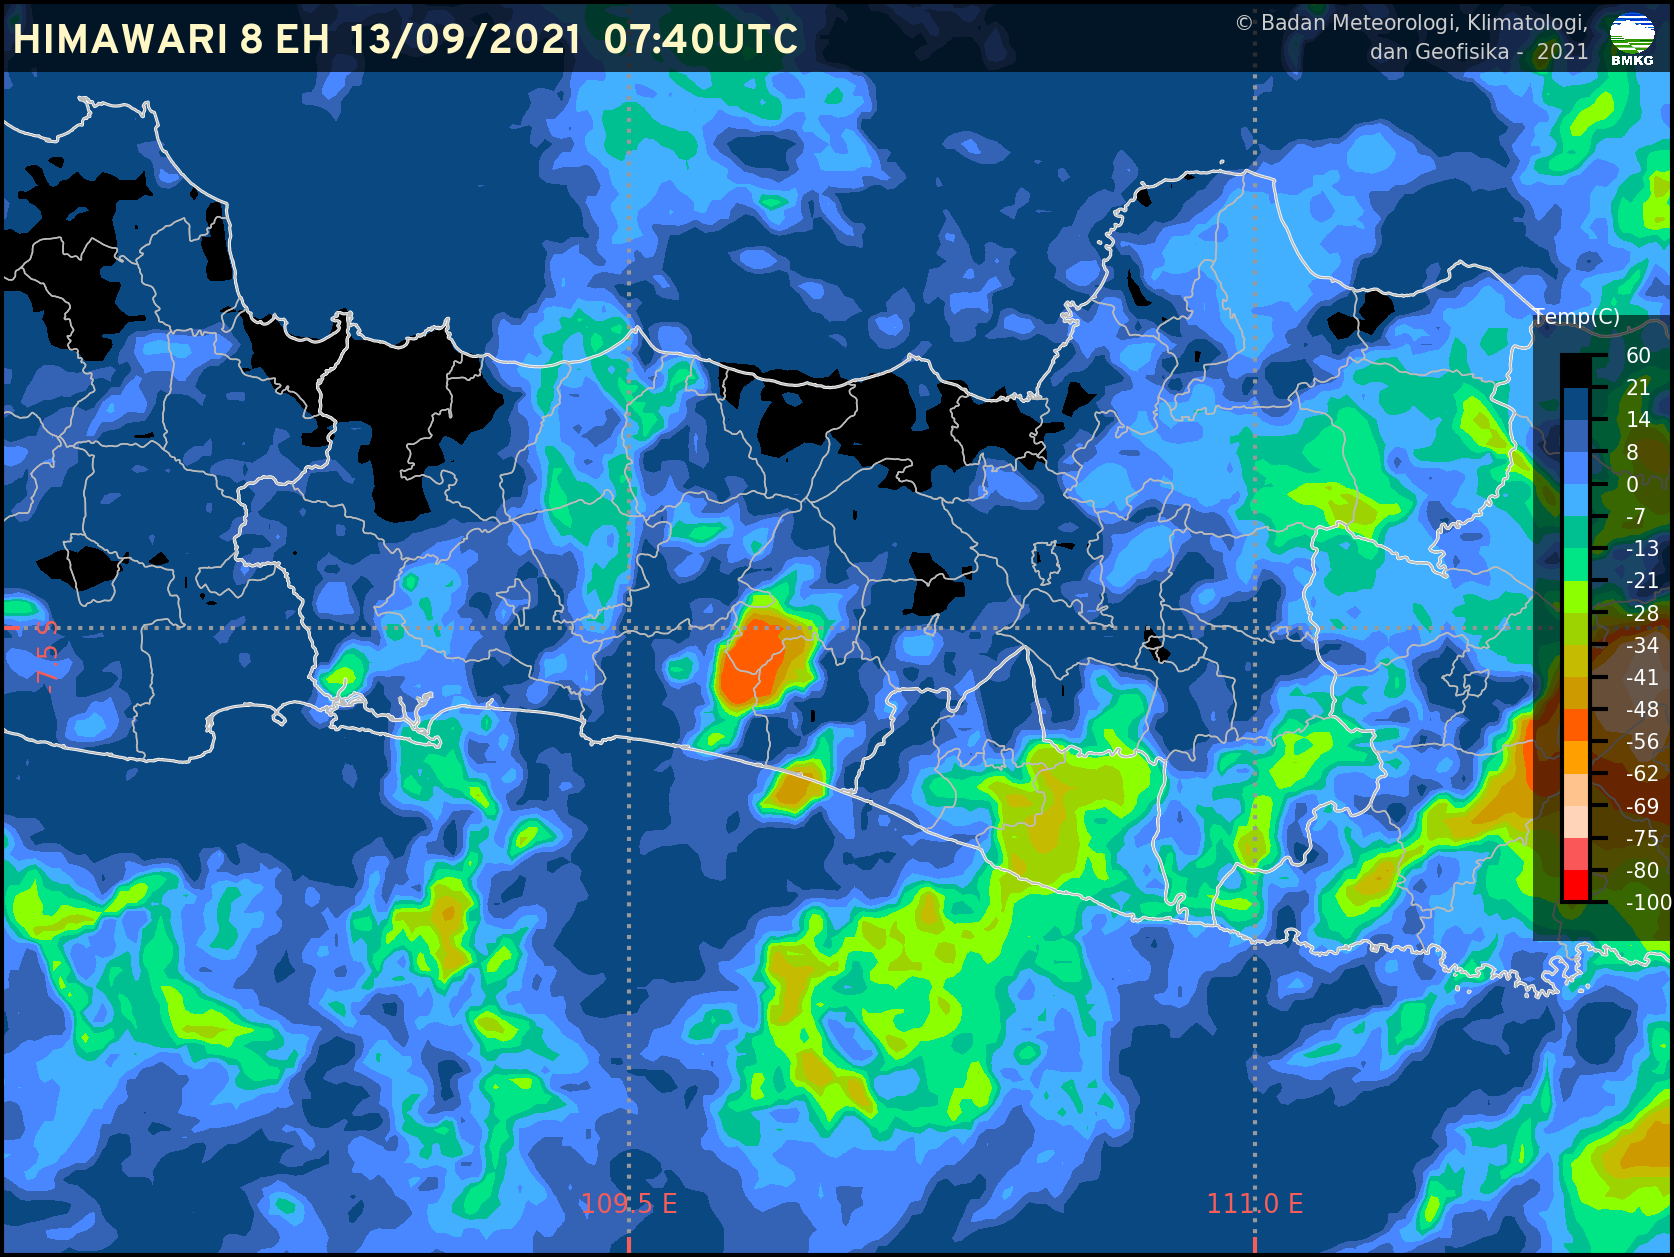 BMKG : Update Perkembangan Cuaca Berpotensi Hujan Lebat Pada Sejumlah Daerah di Jawa Tengah